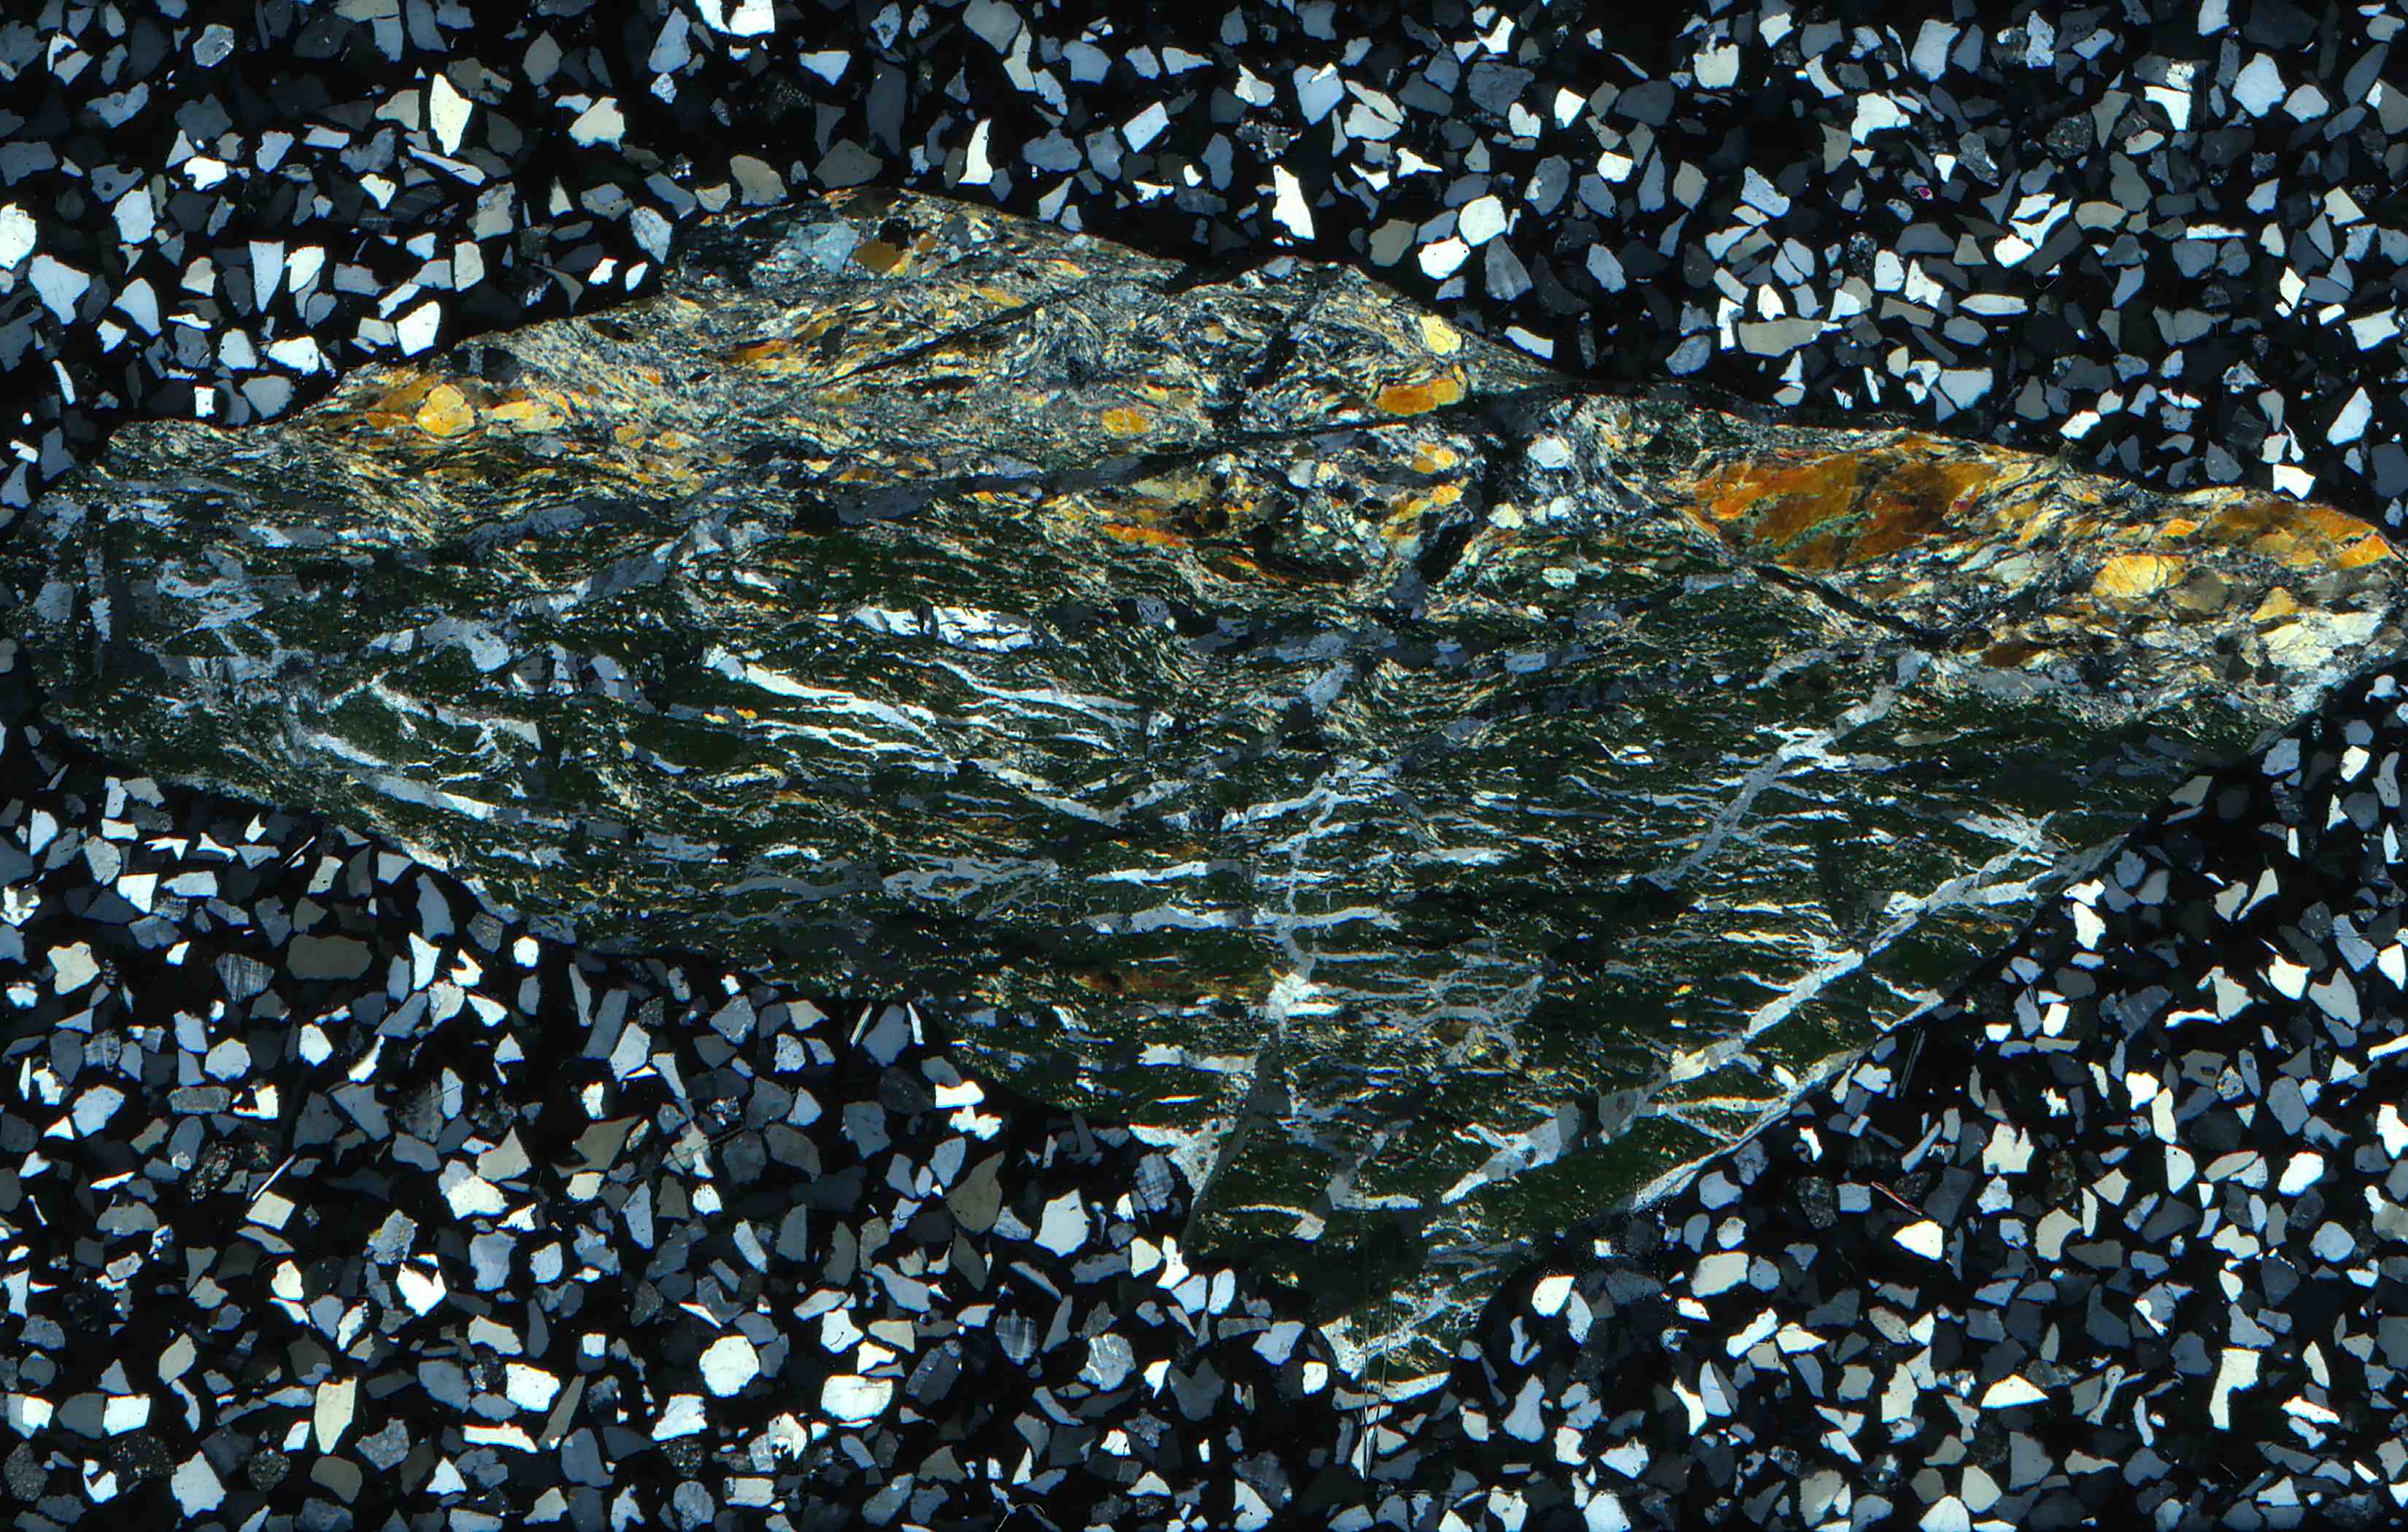 Burma kosmochlor and eckermannite jadeitite in thin section